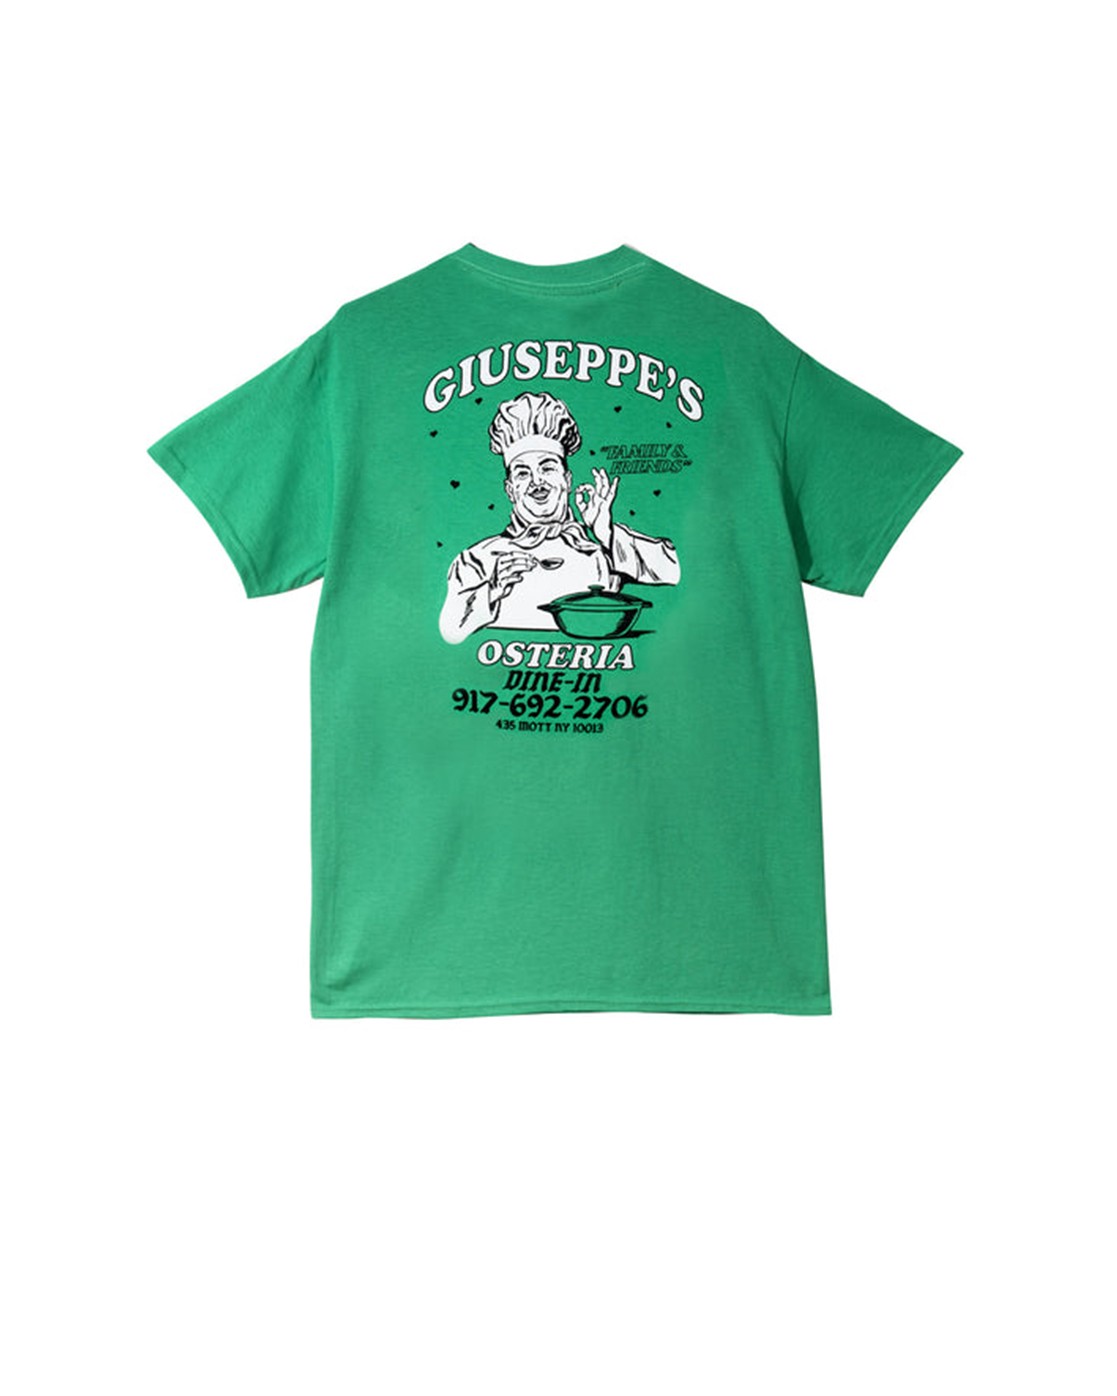 Giuseppes Green Tee